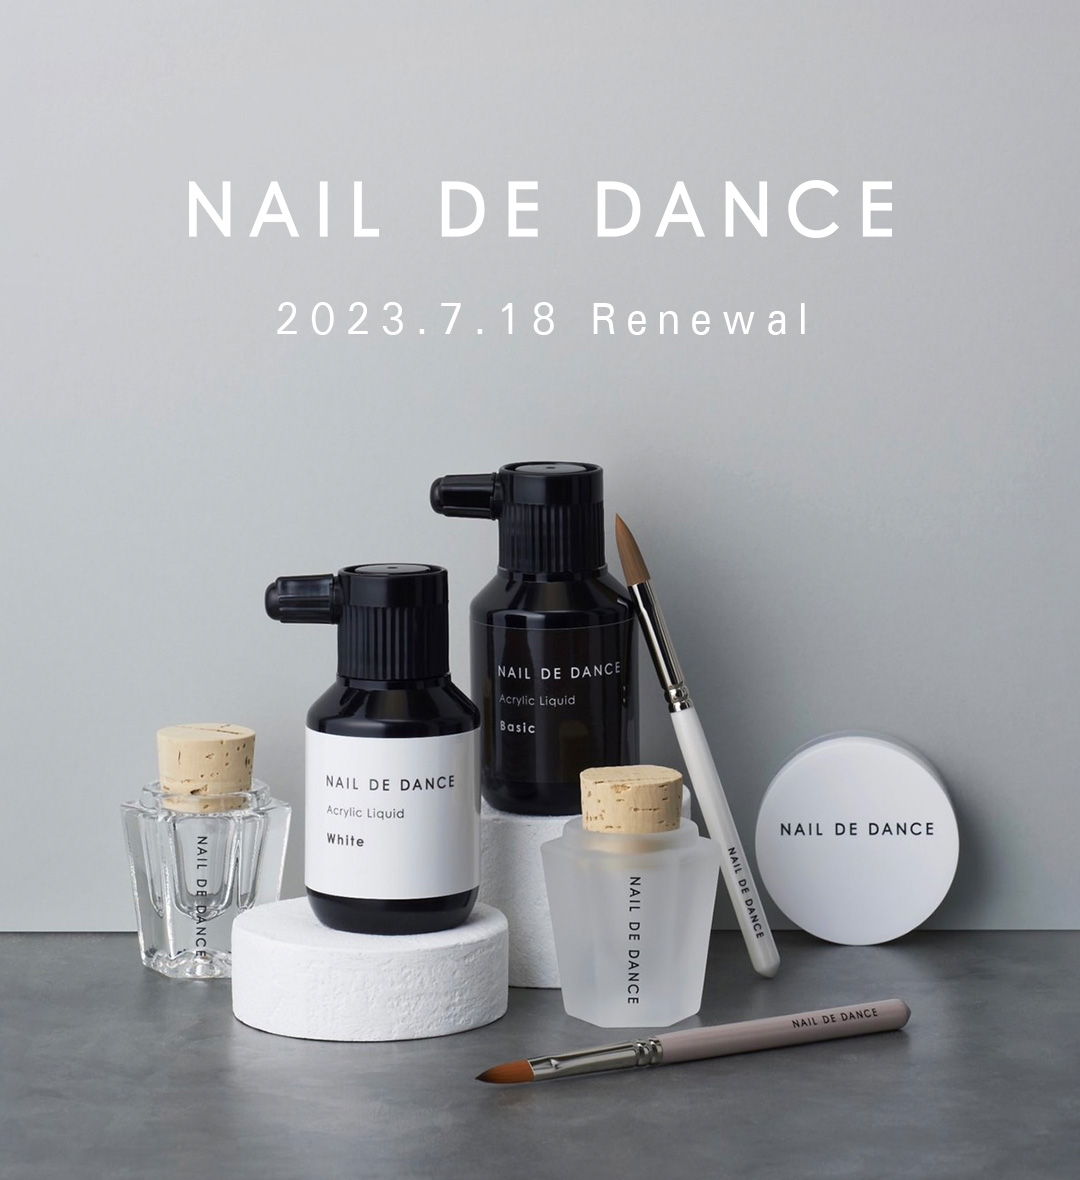 NAIL DE DANCE Renewal | Nail Labo Online Shop ネイルラボ